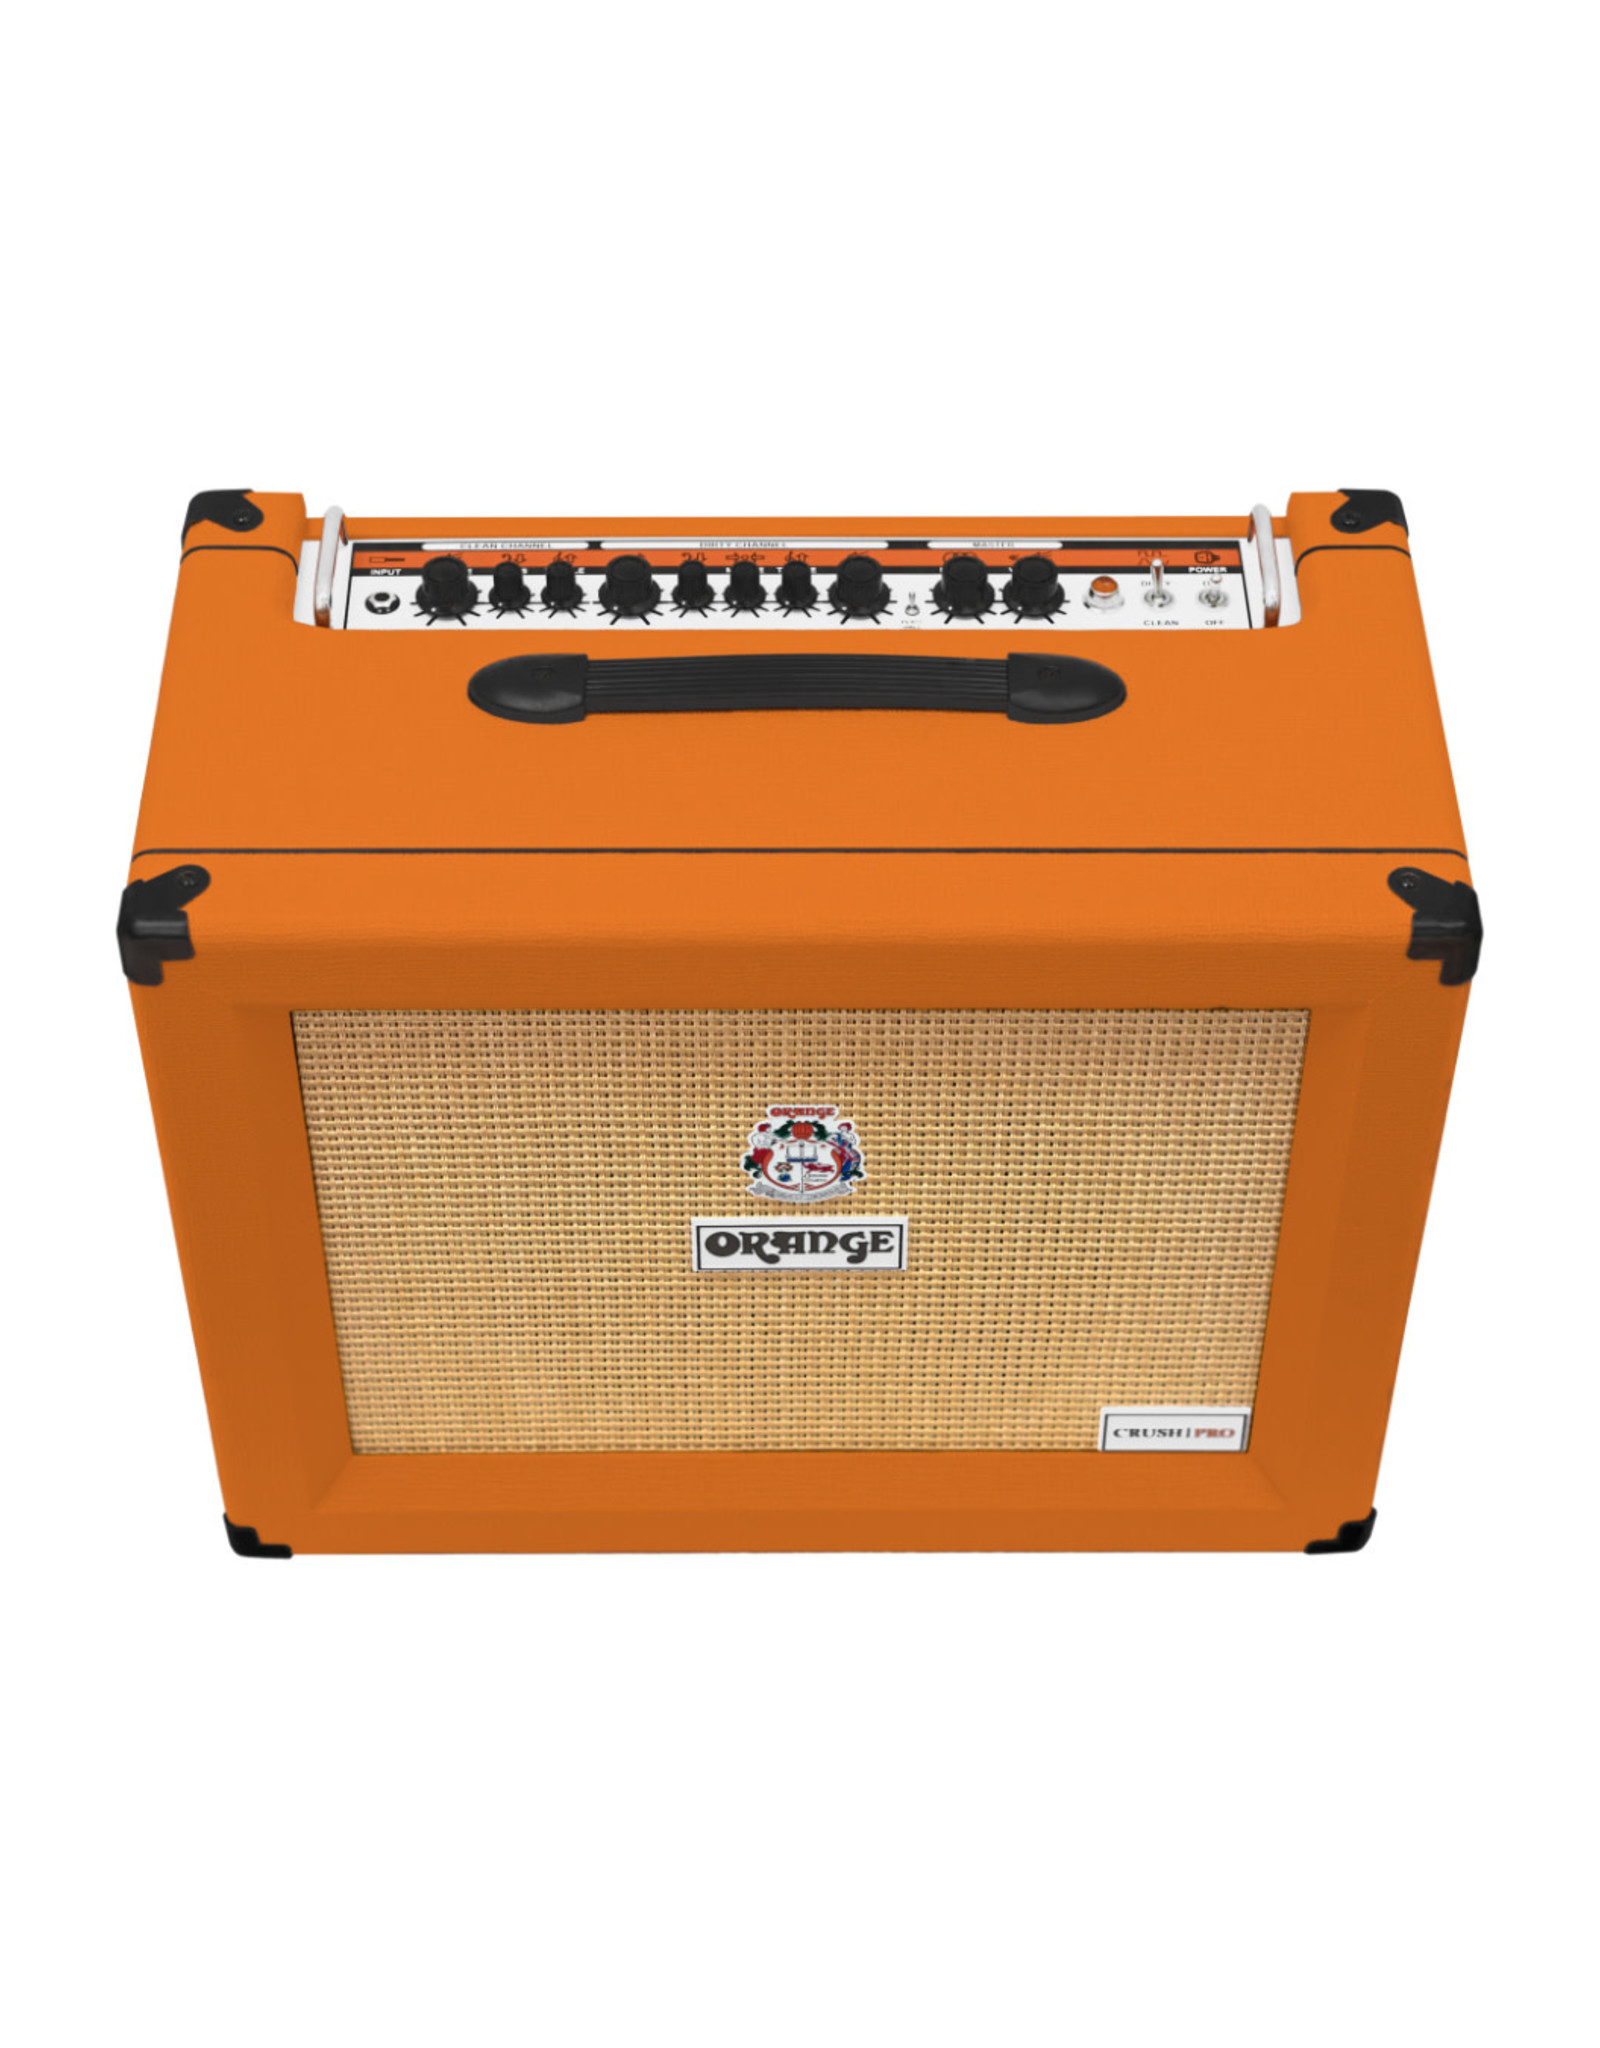 Orange Orange Crush Pro 60 Guitar Amplifier